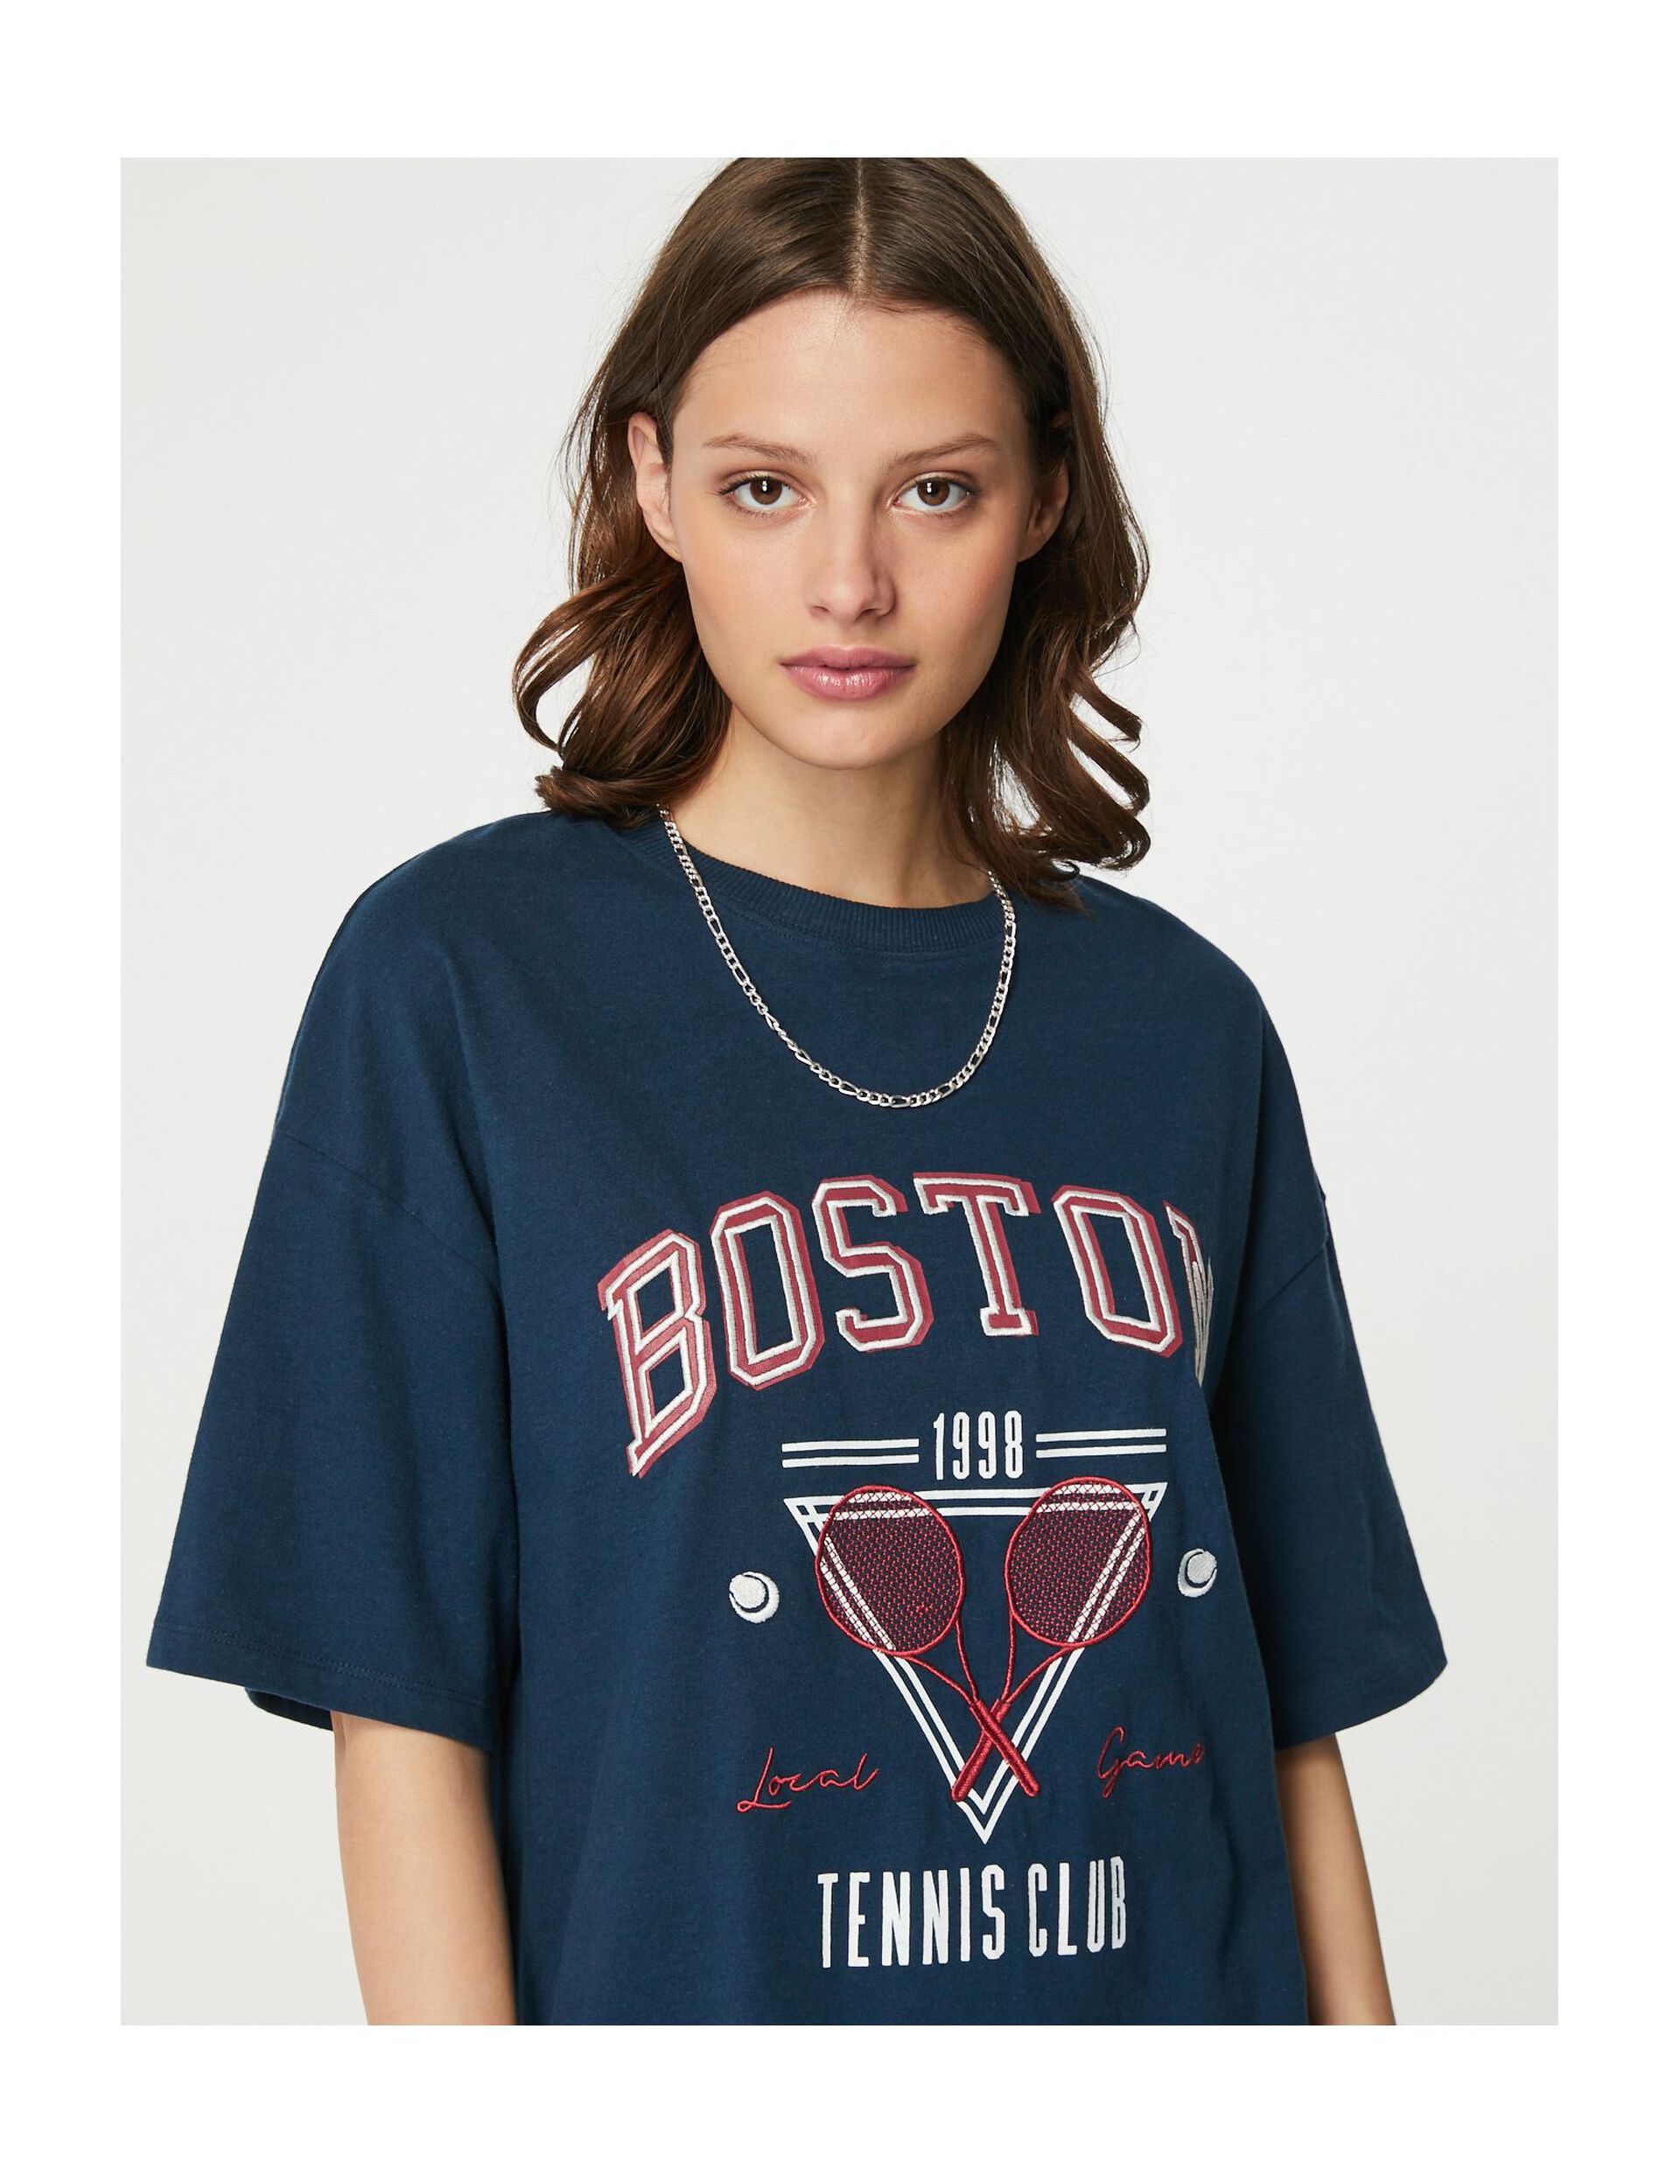 Boston oversized T-shirt